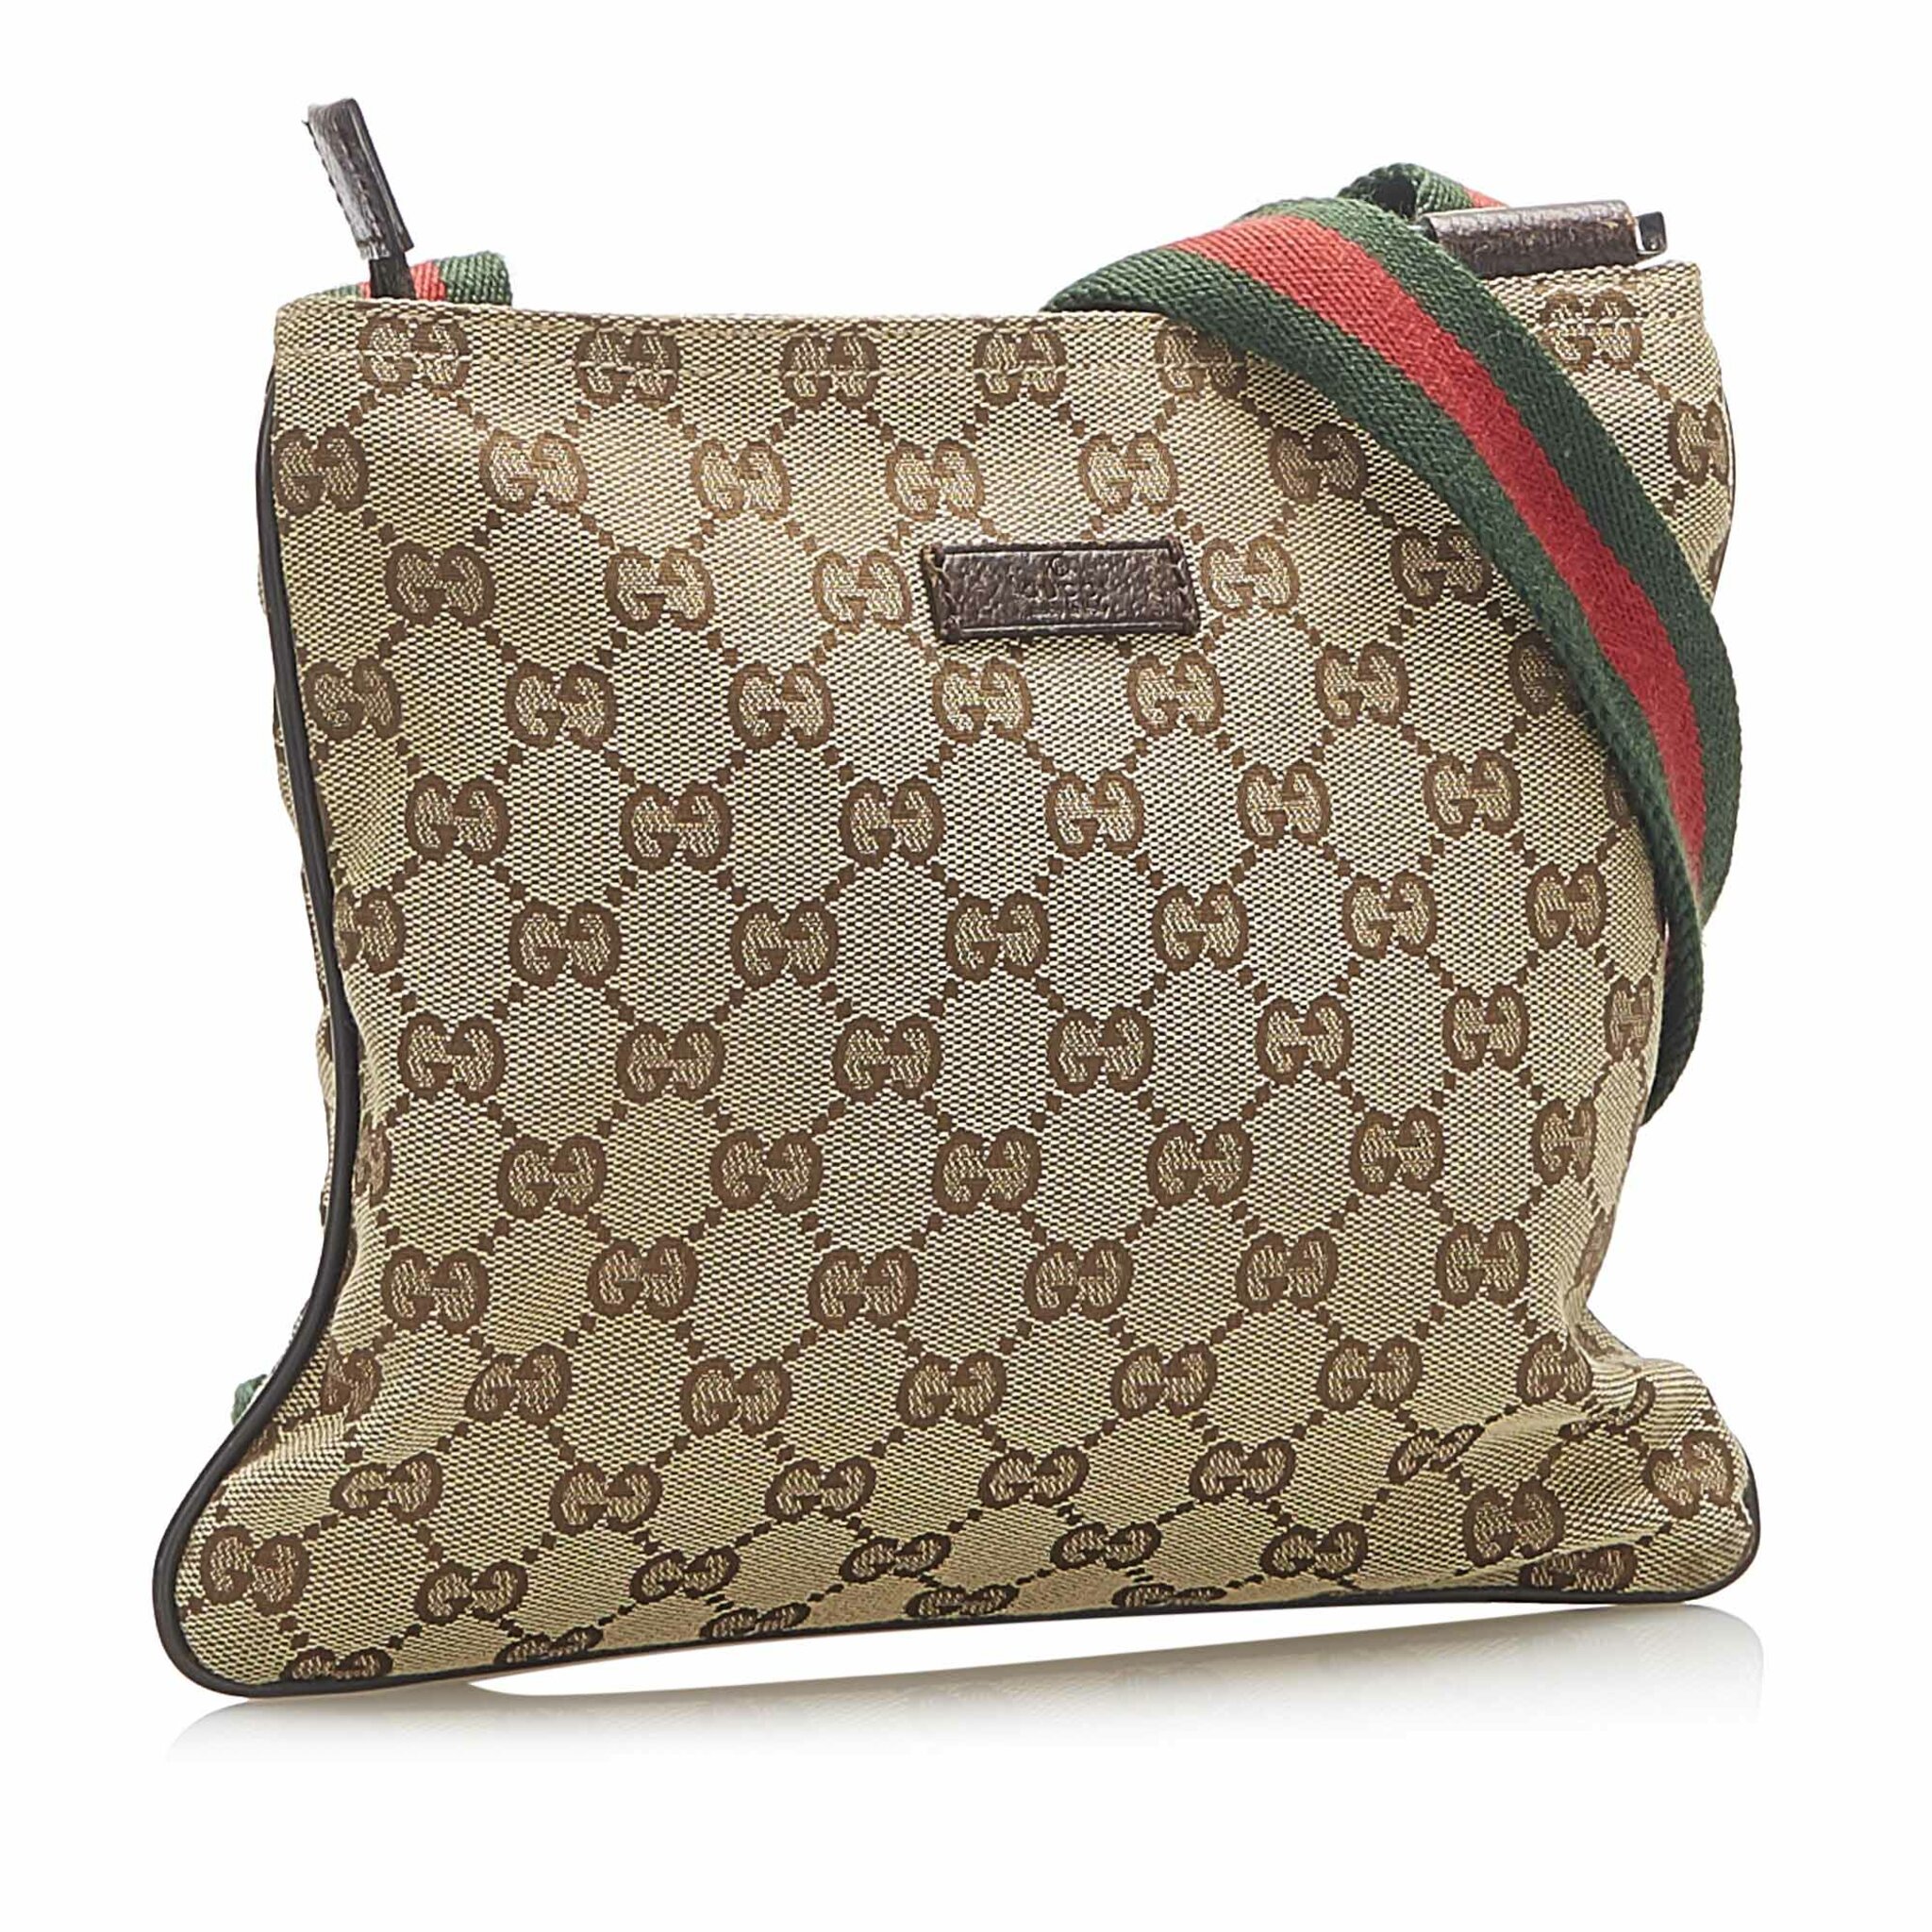 Gucci Gg Canvas Web Crossbody Bag, beige, beige